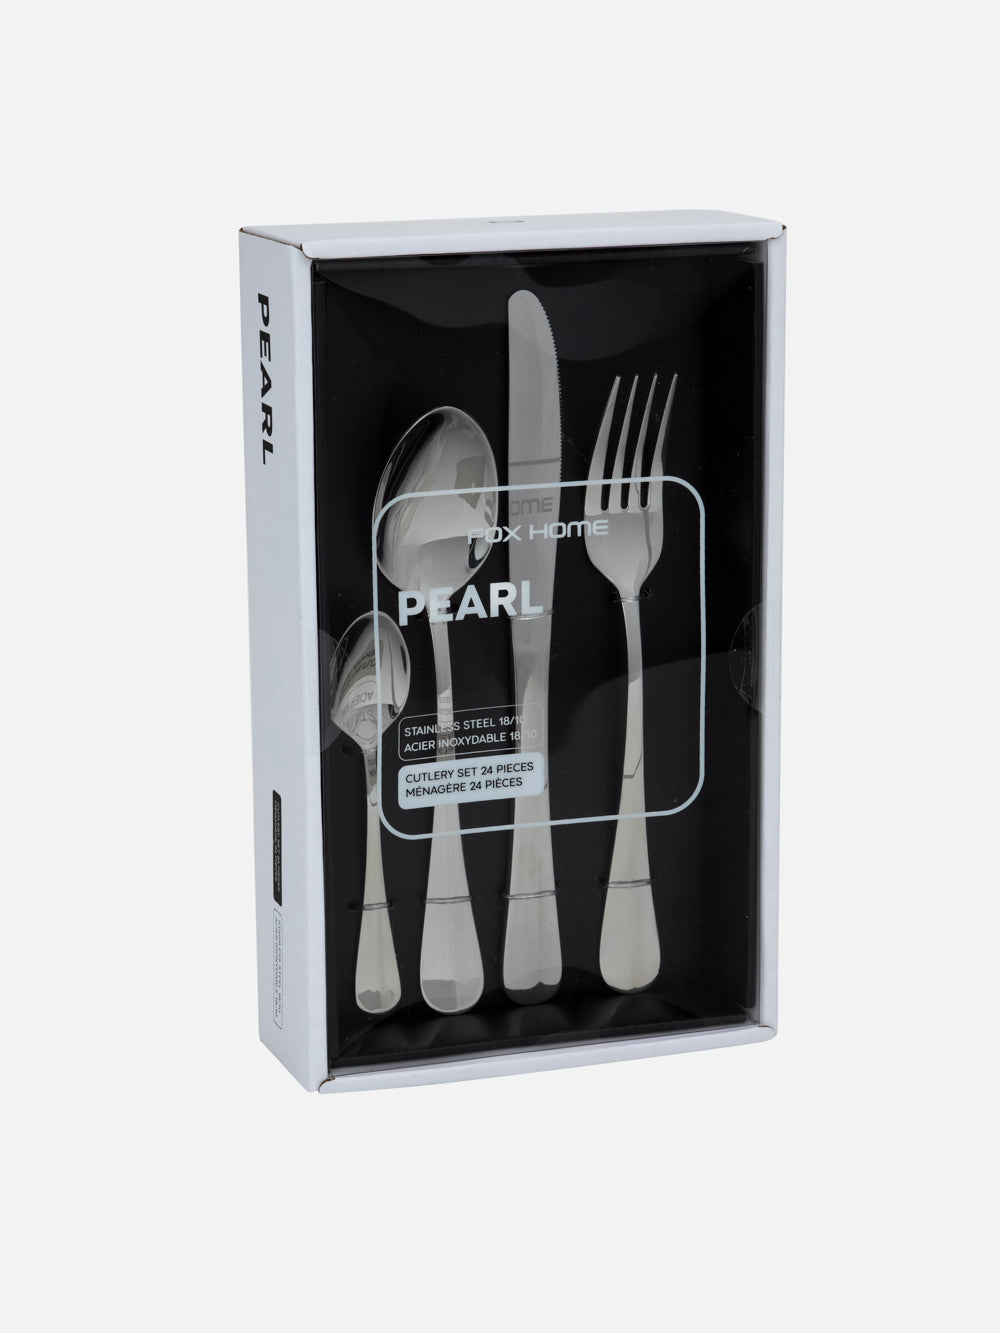 Pearl 24-Piece Cutlery Set